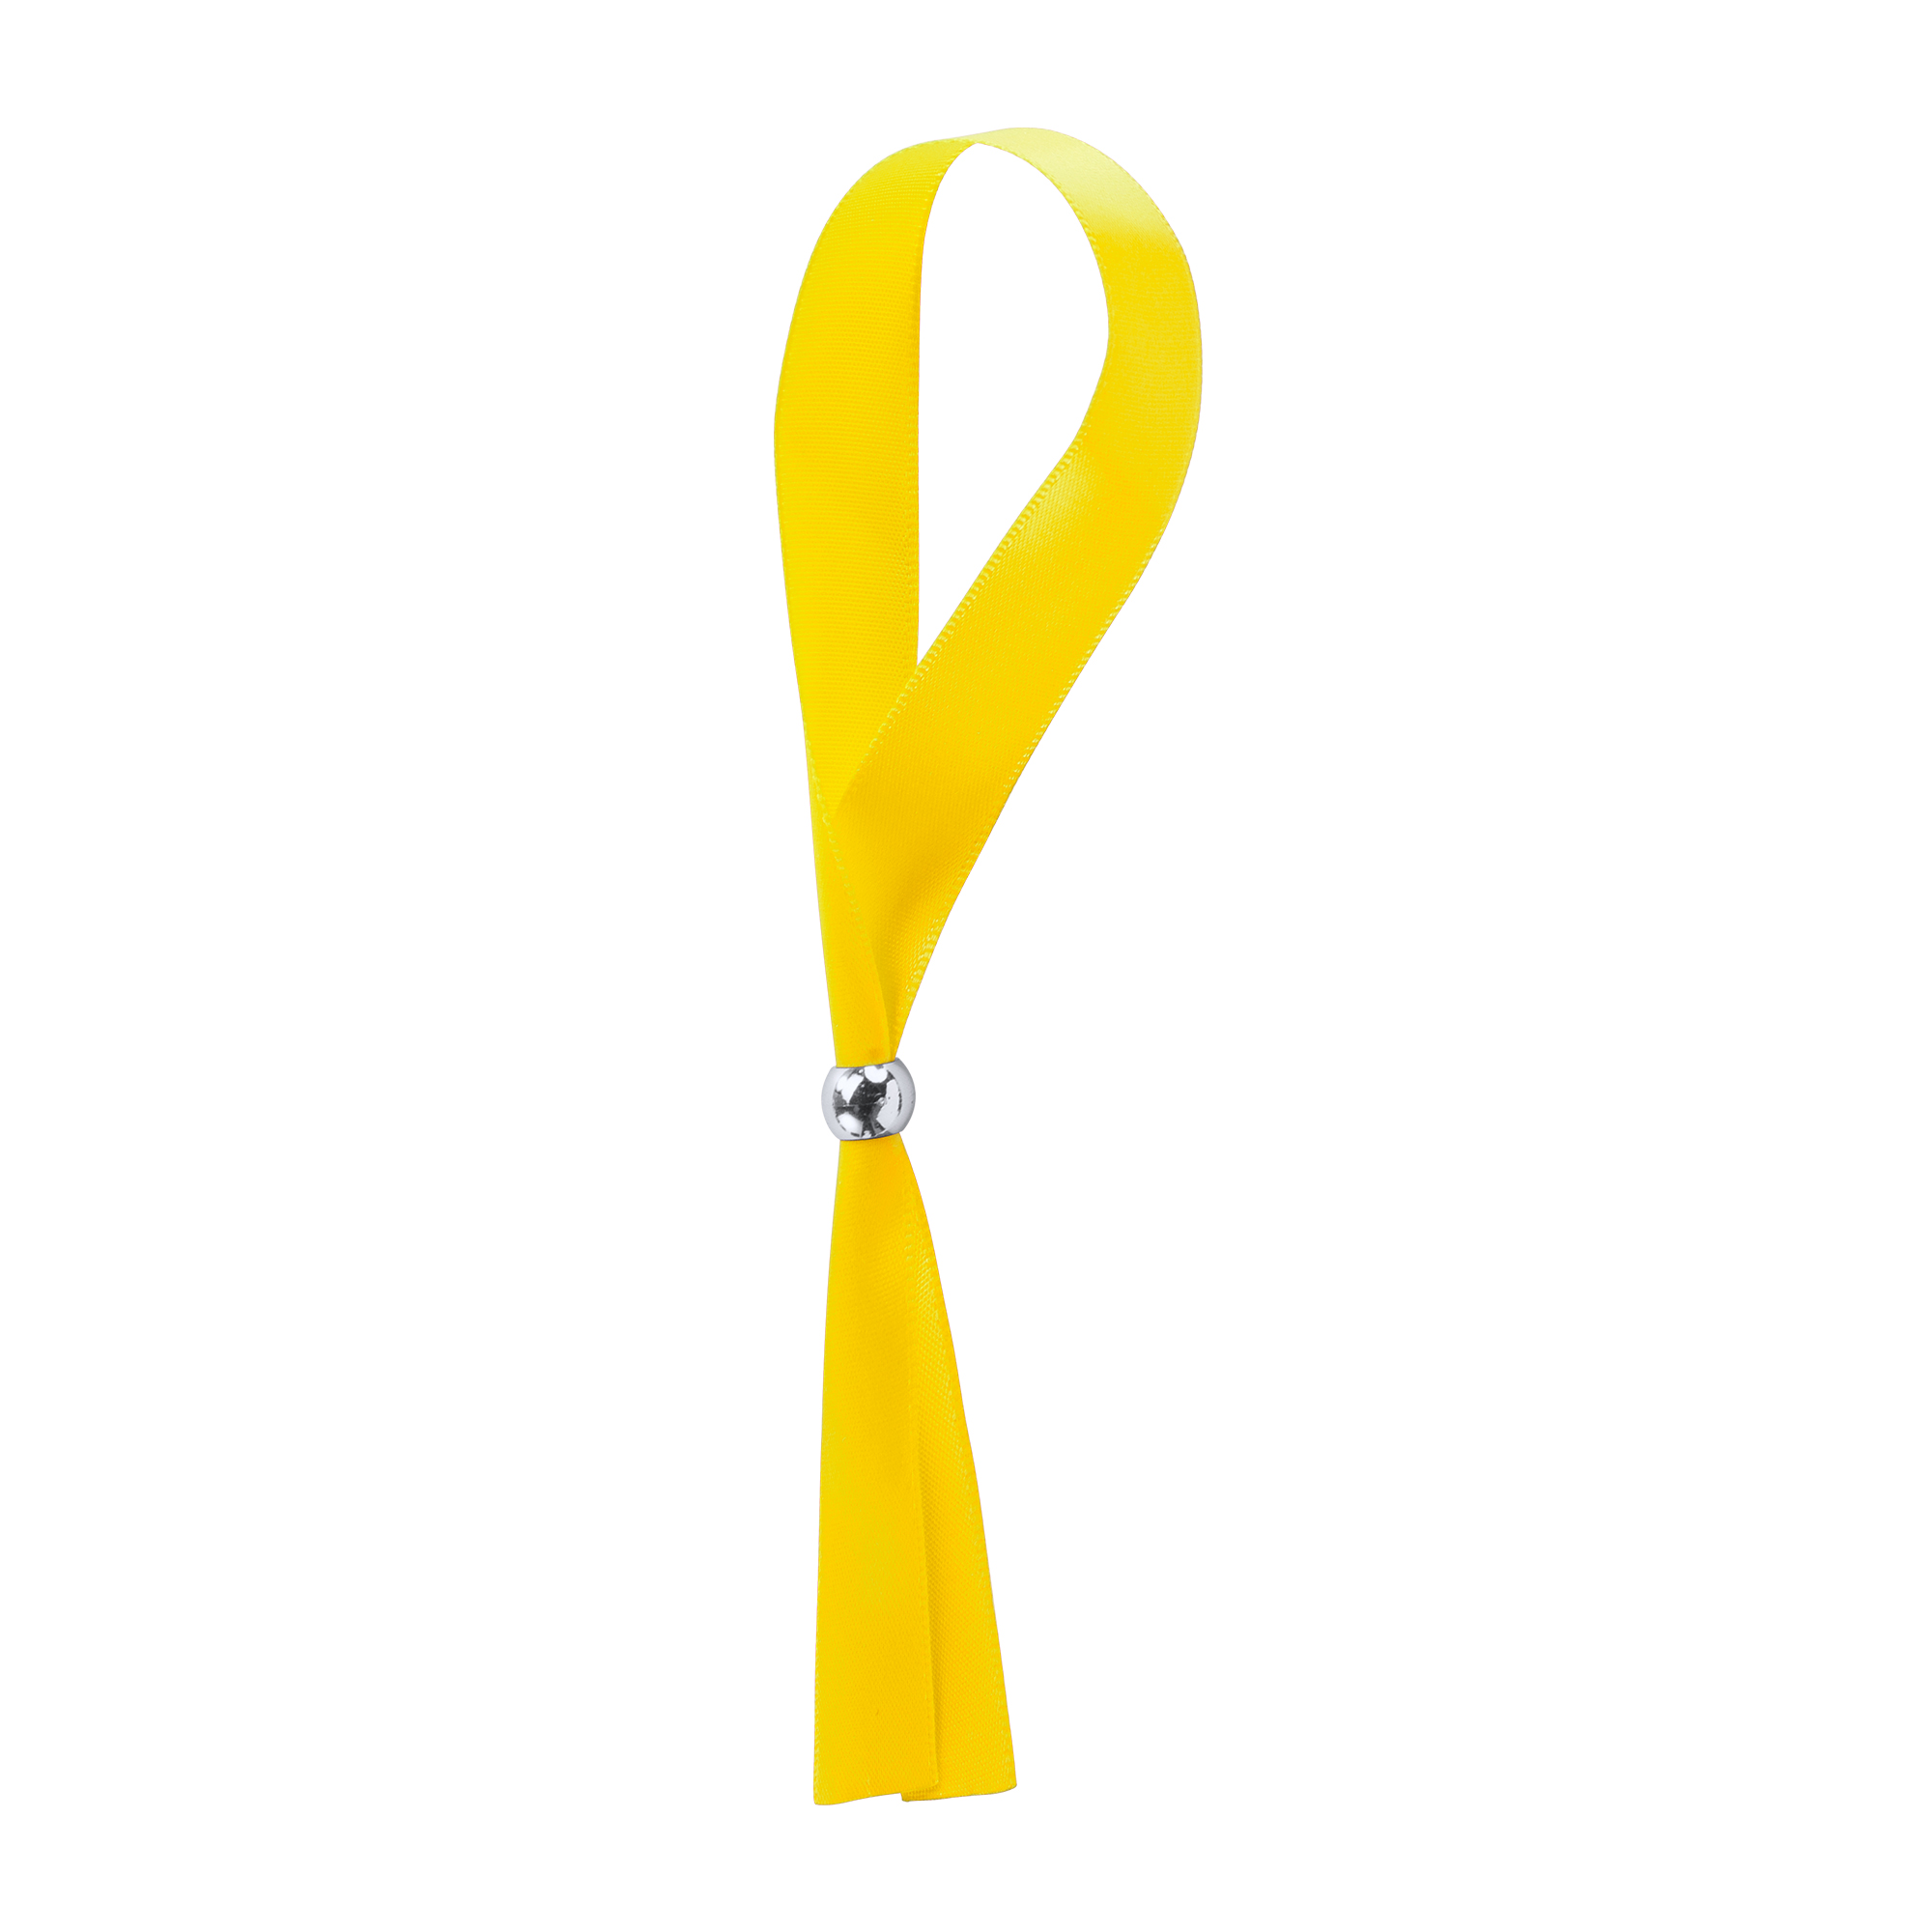 3542-sighet-braccialetto-regolabile-in-poliestere-giallo.jpg